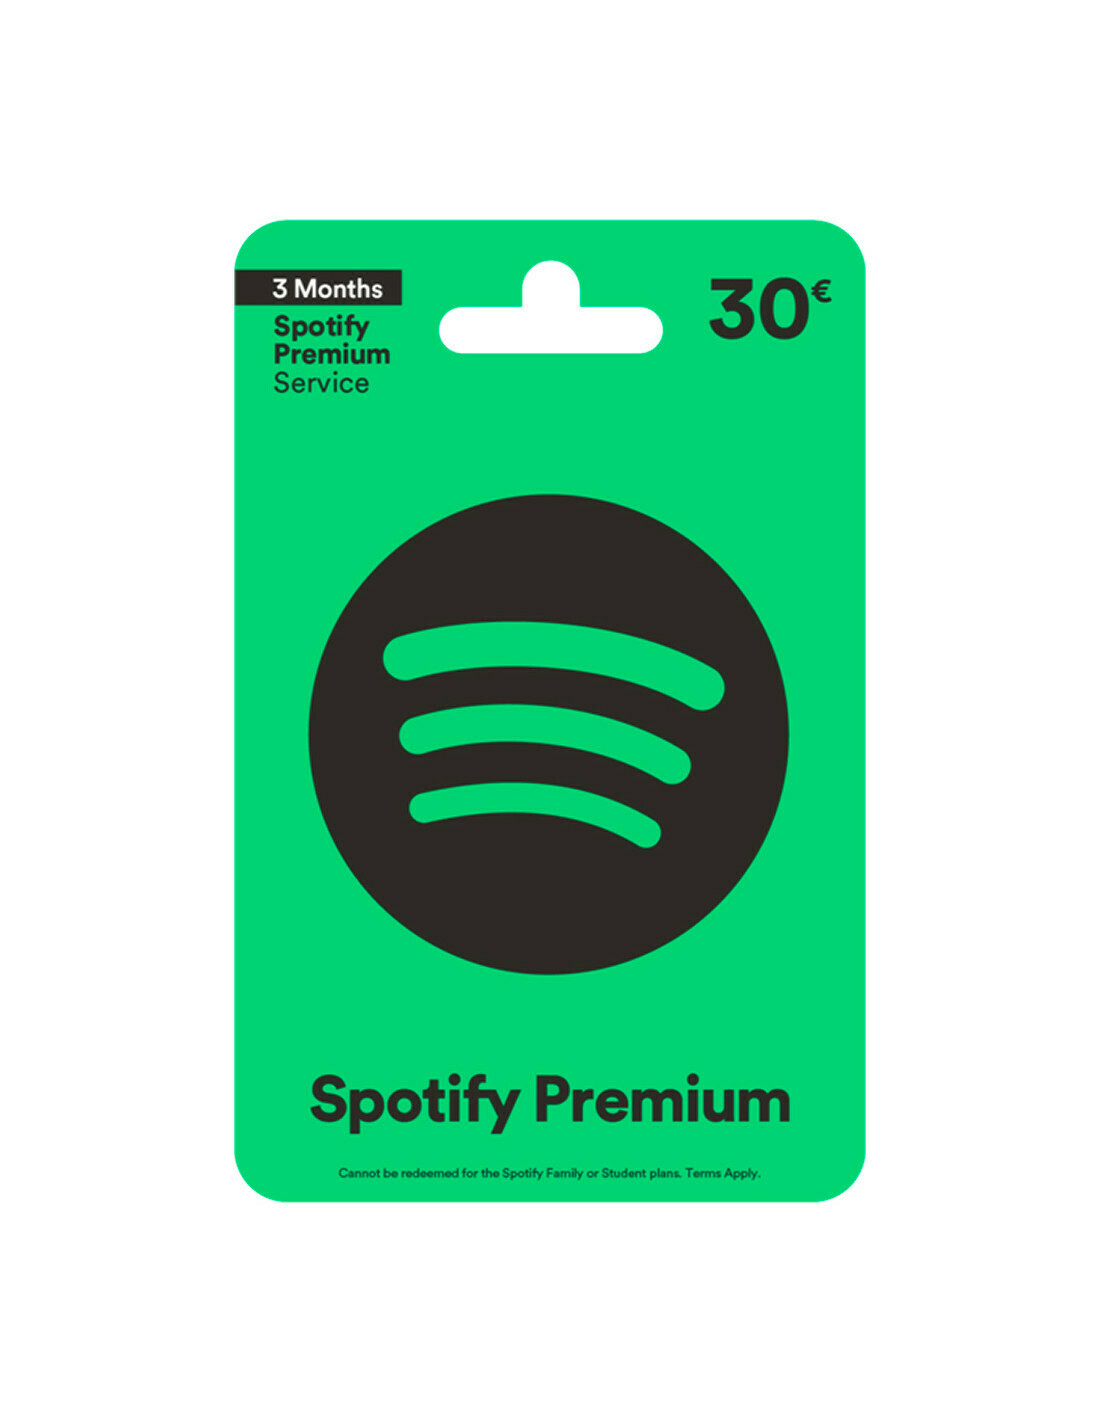 Carte cadeau Spotify Premium 30€